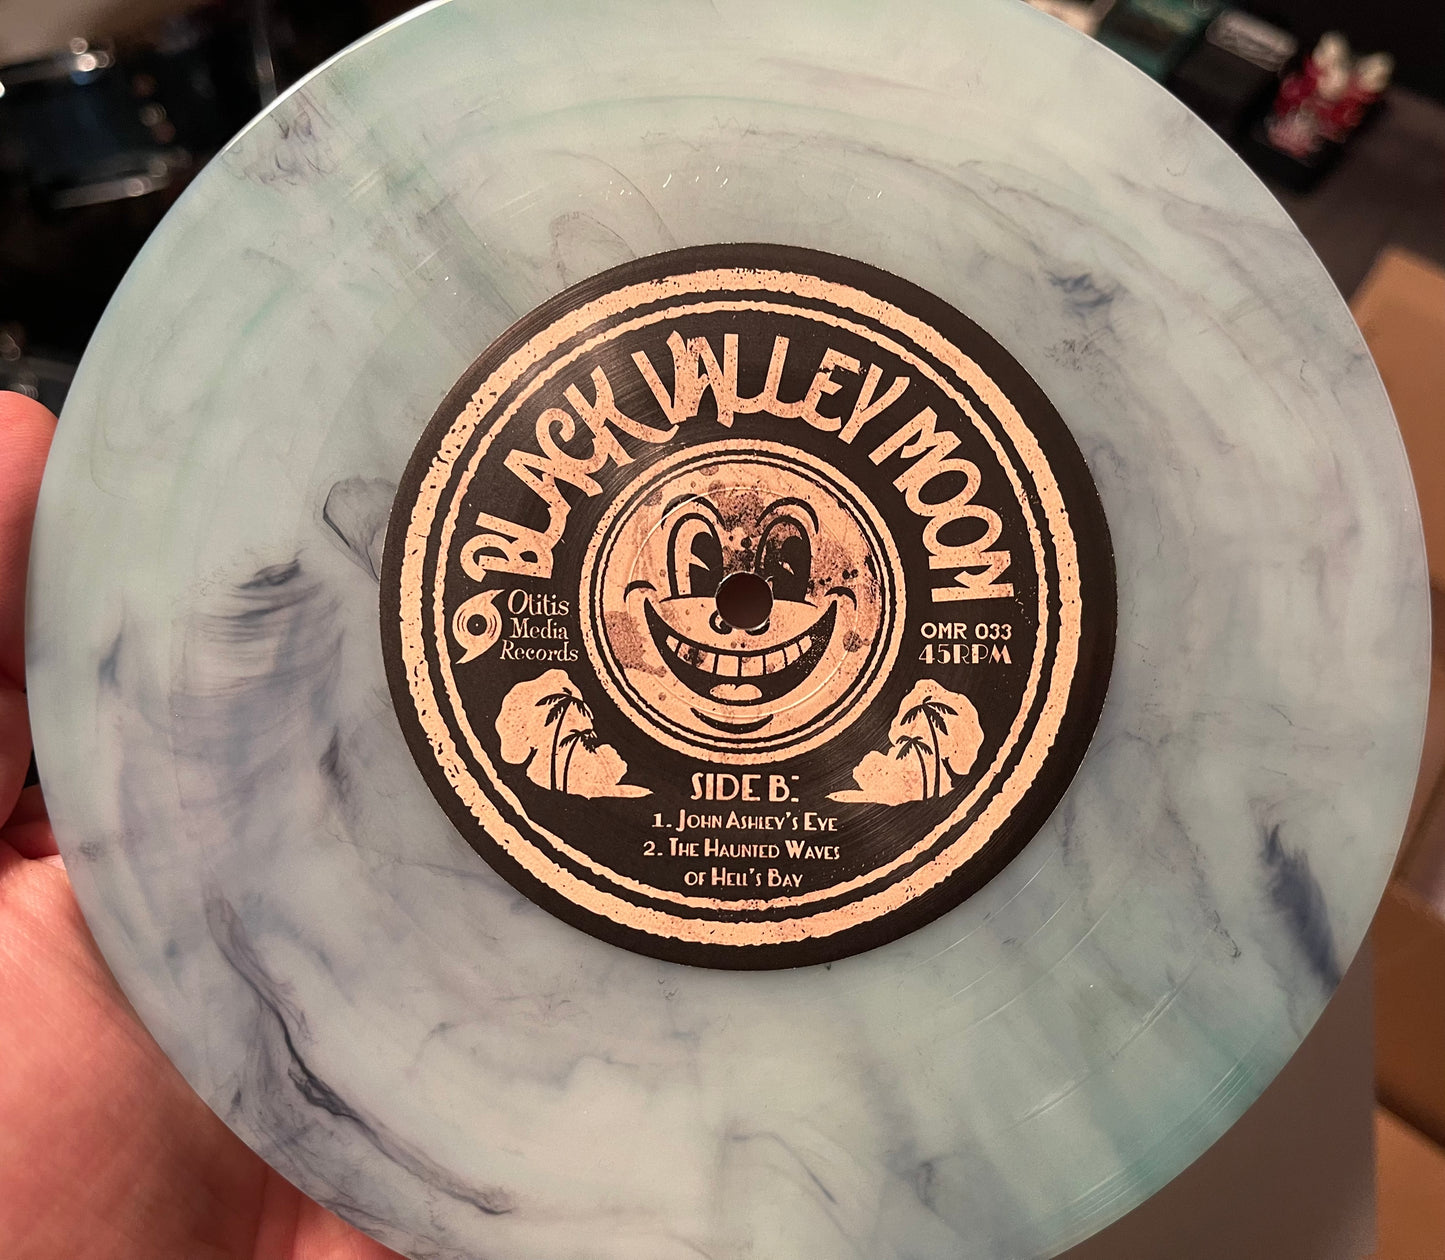 OMR-033 BLACK VALLEY MOON “Spectral Melodies” 7 inch Vinyl Record  (Random Color)